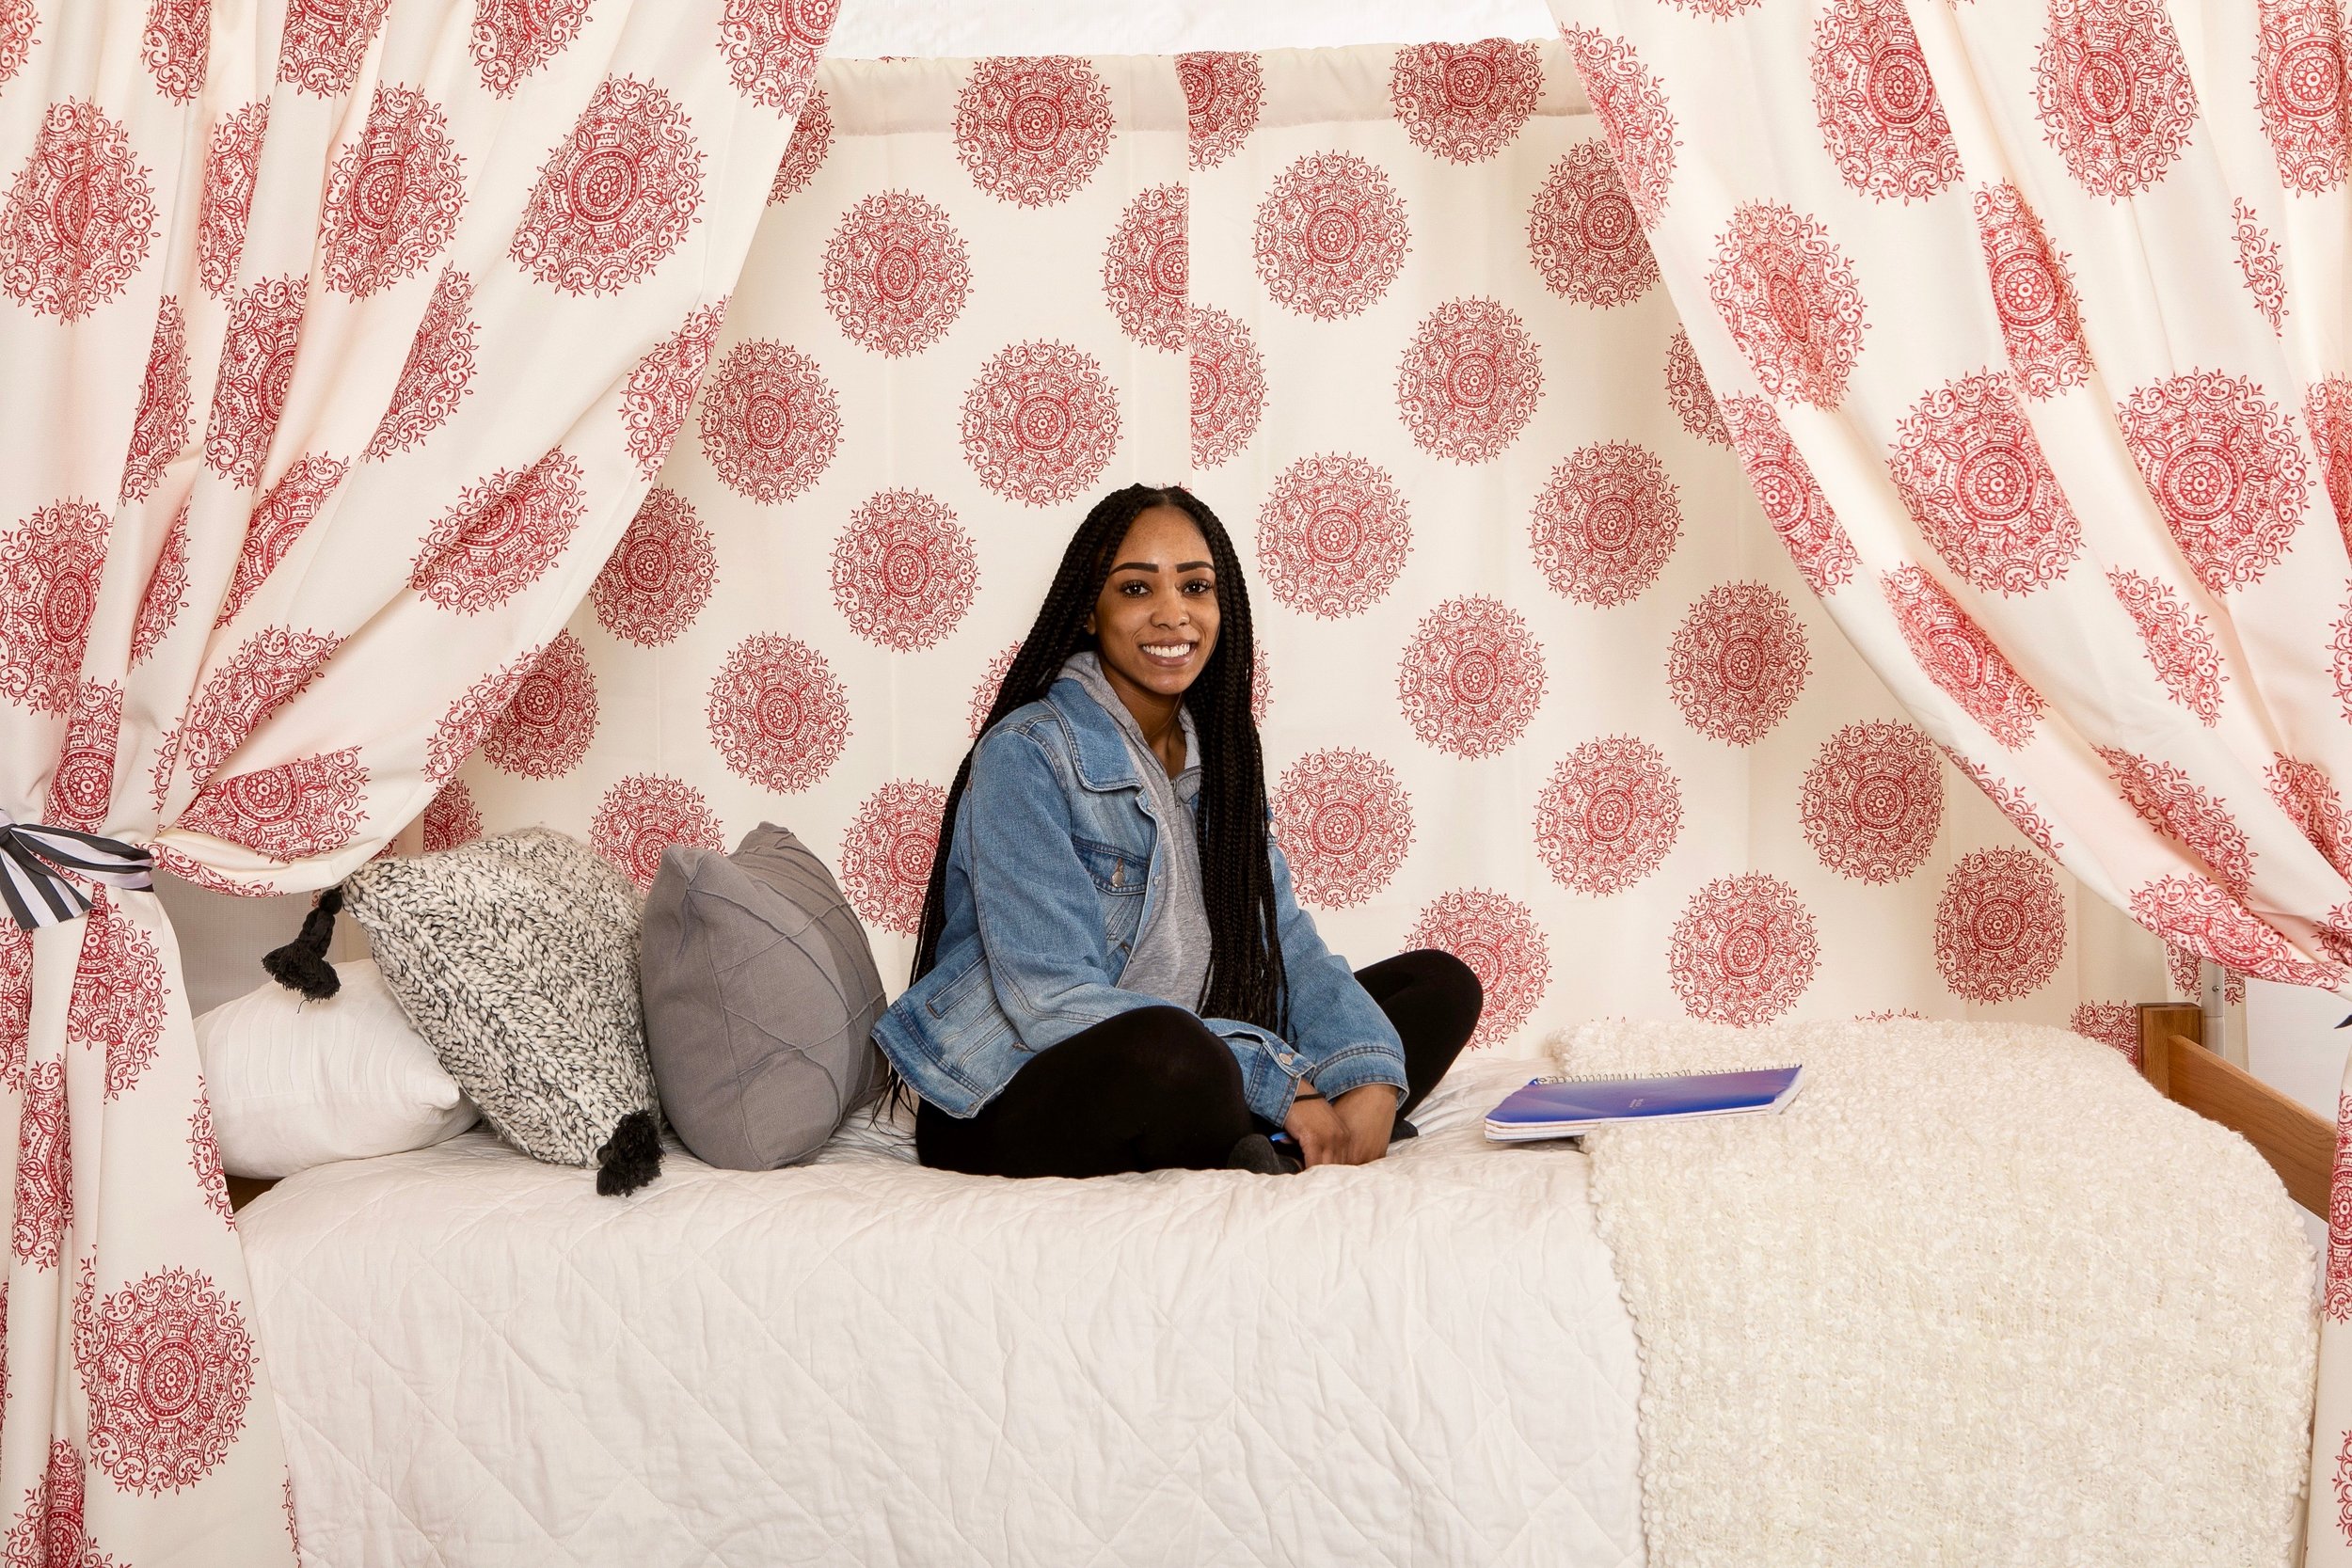   Campus Canopies    Sleep Better, Study Smarter  